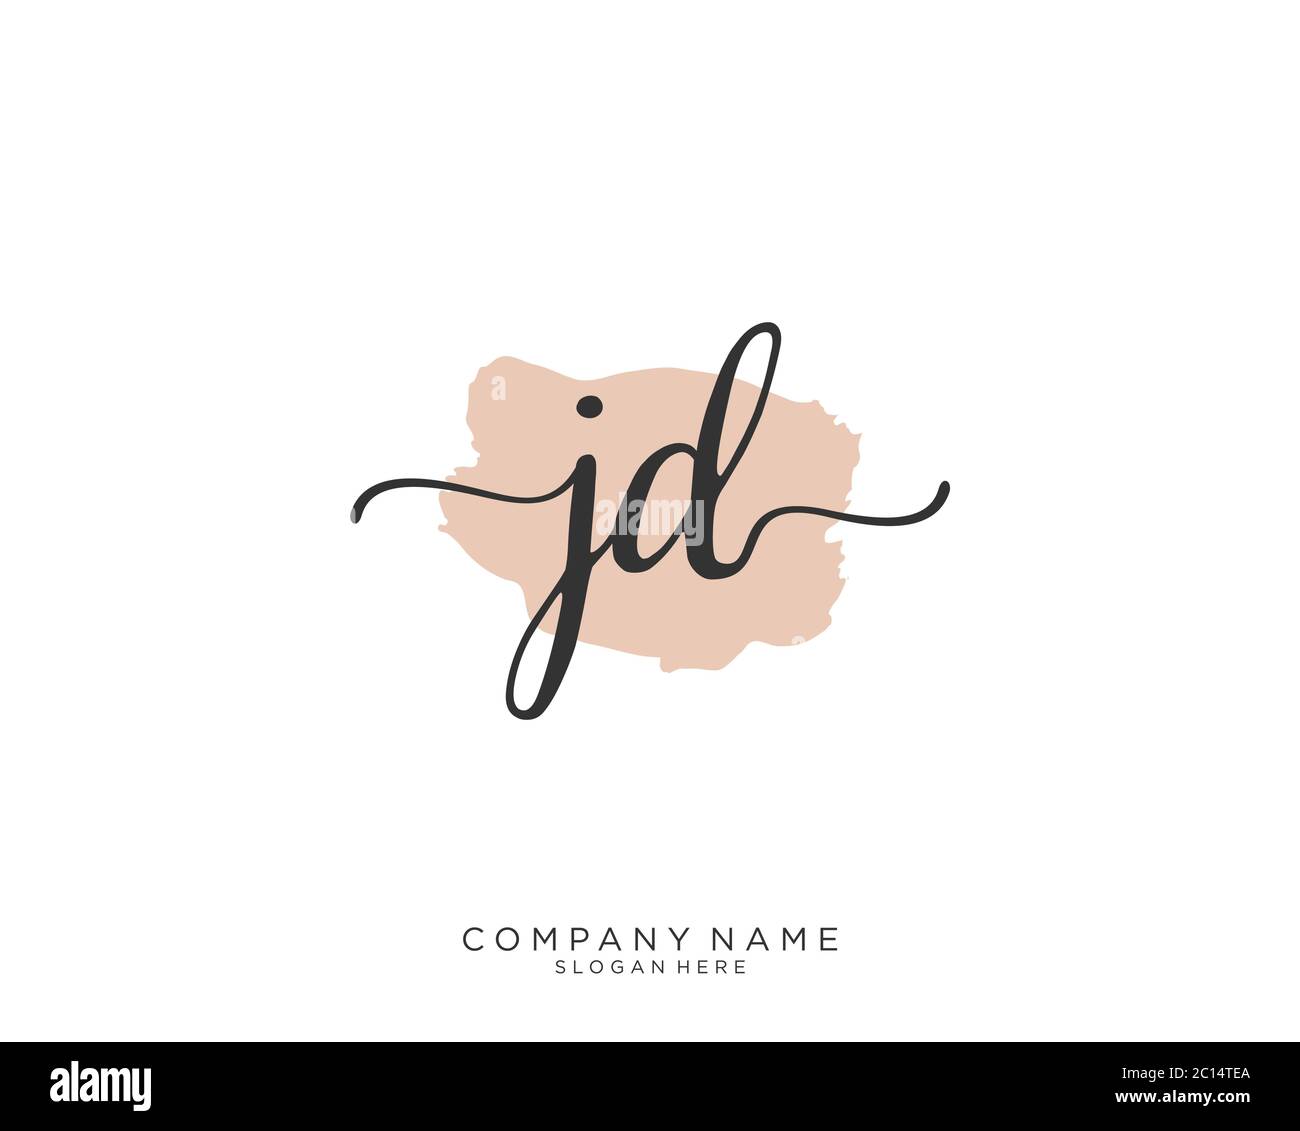 JD Initial handwriting logo vector Stock Vector